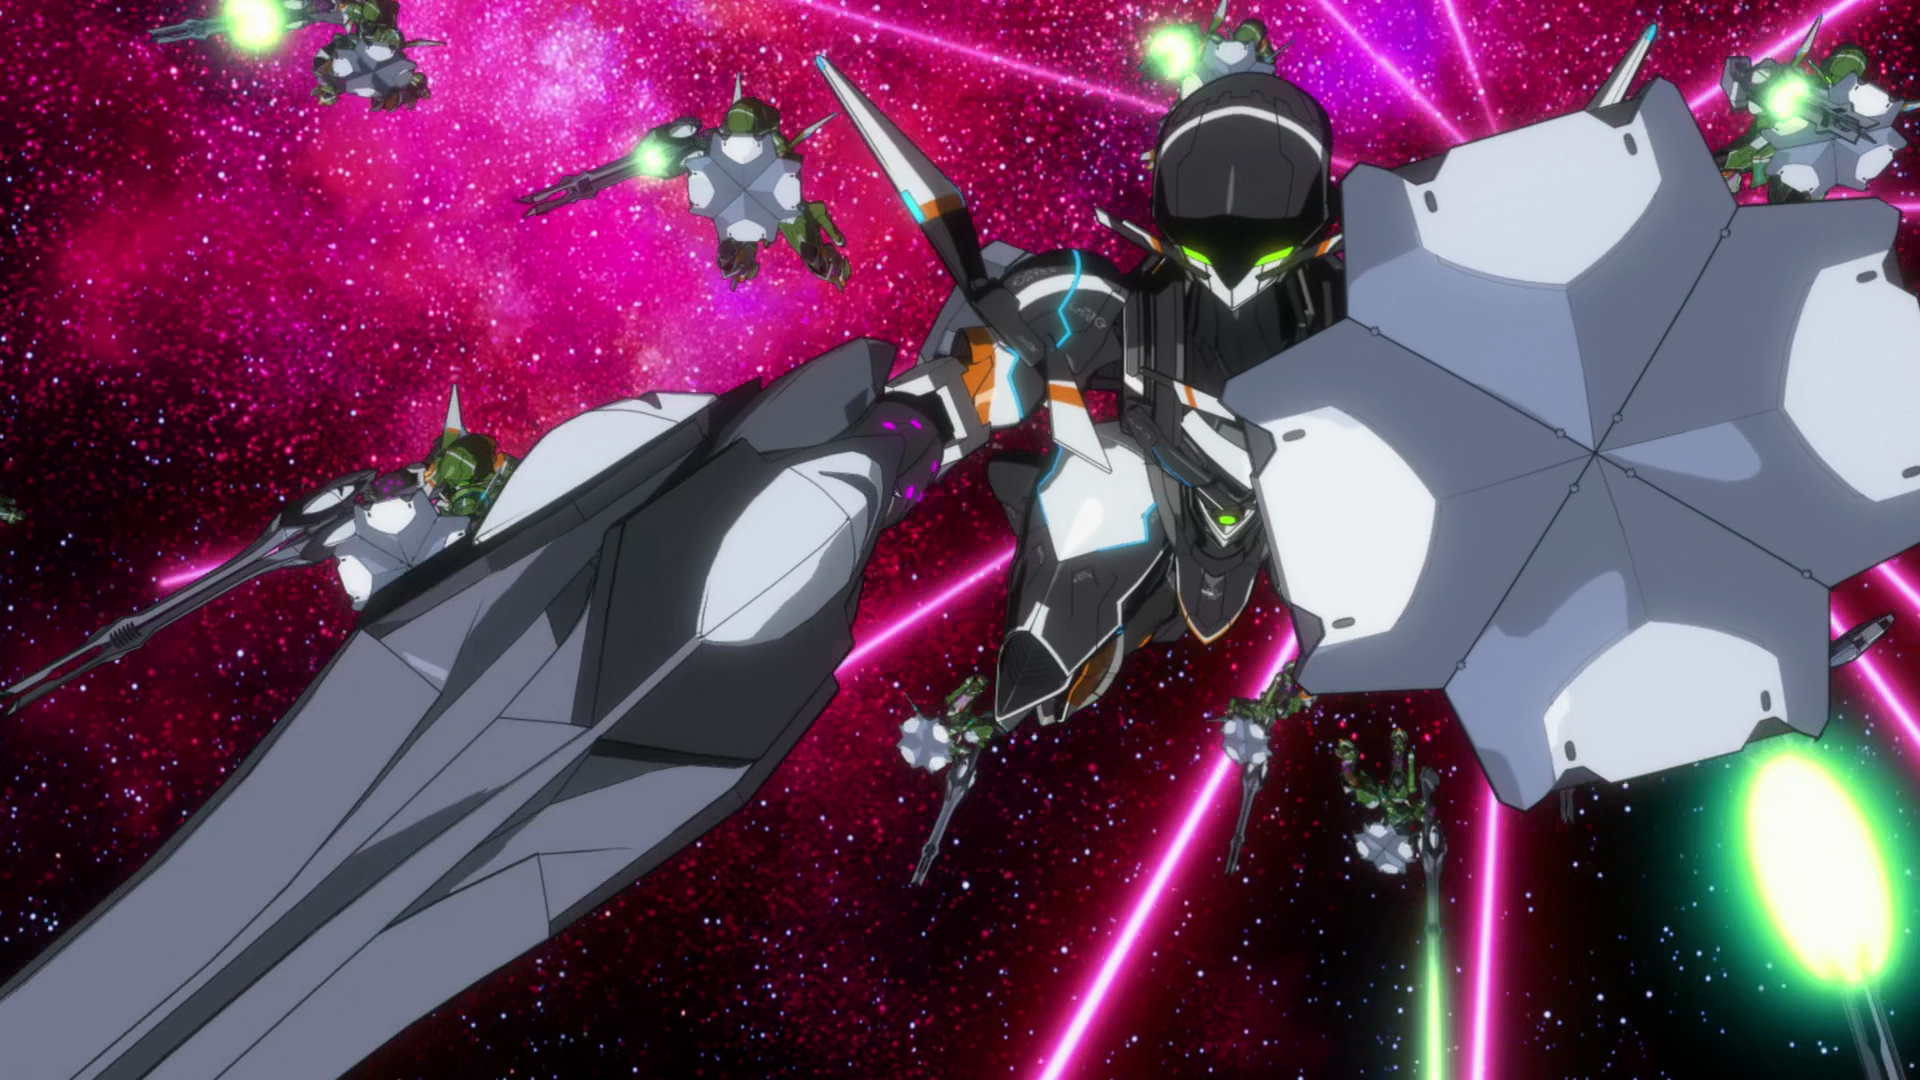 Suisei No Gargantia Chamber Suisei No Gargantia Mecha Fight Space Fight Robot Anime Screenshot Anime 1920x1080